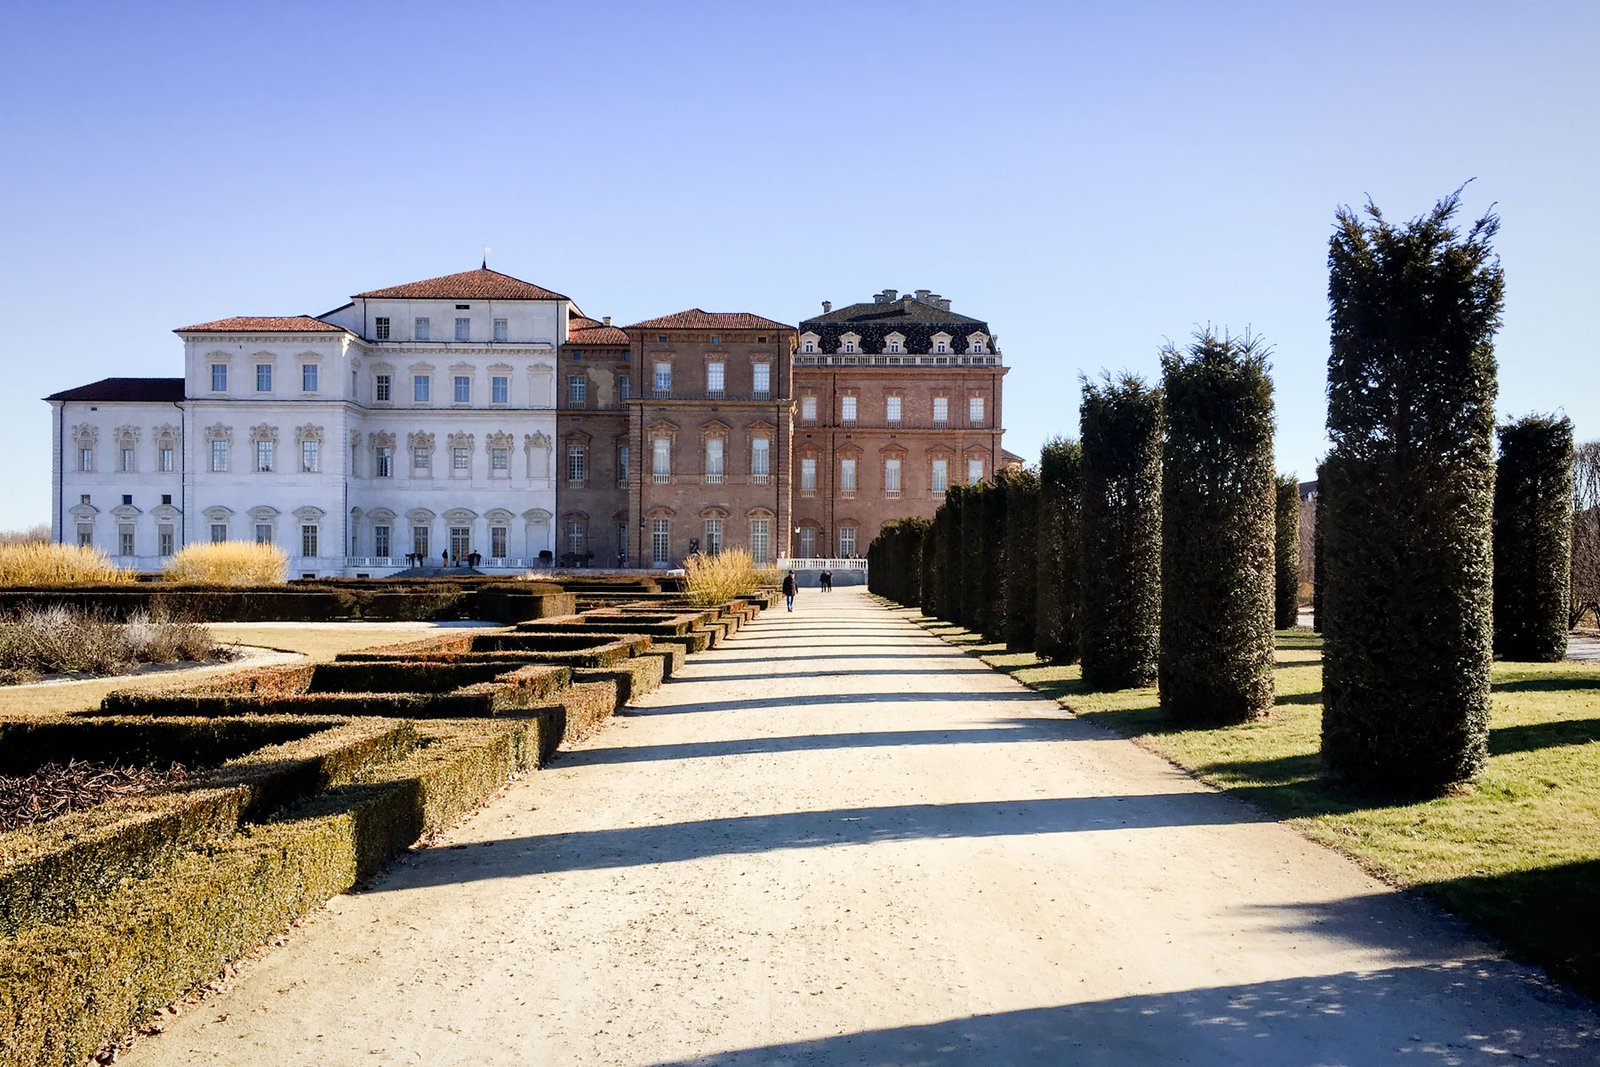 La Reggia di Venaria Reale - a beautiful palace near Turin. Also known as Italy's Versailles.